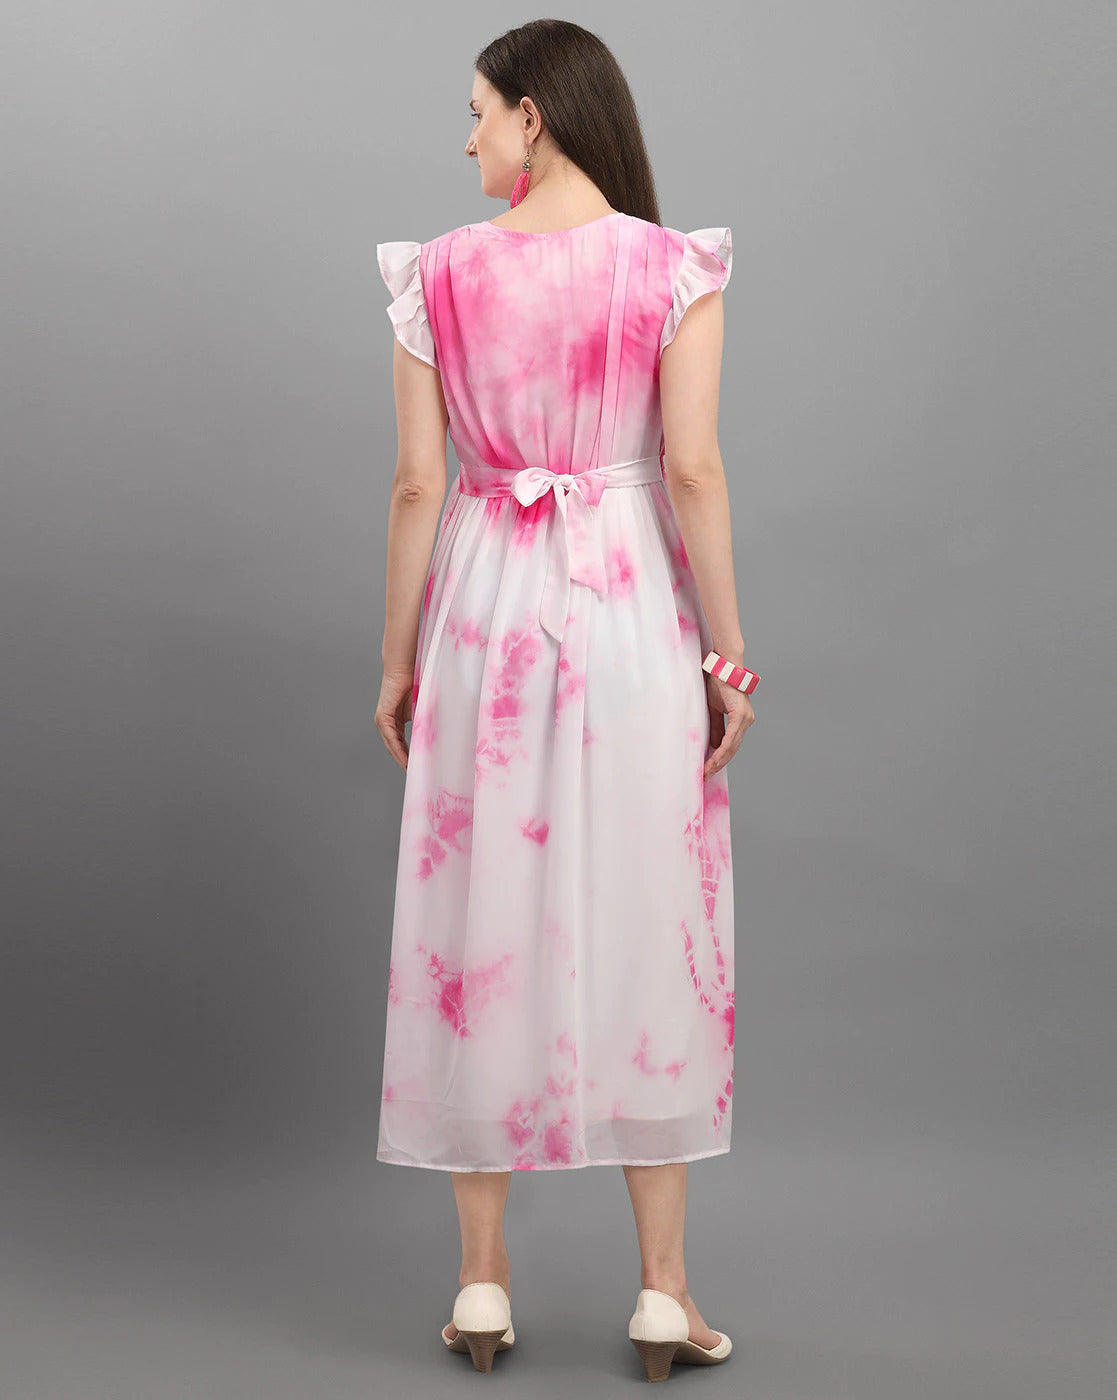 The Vendorvilla Beautiful Tie Dye Georgette Printed Flared Dress For Women